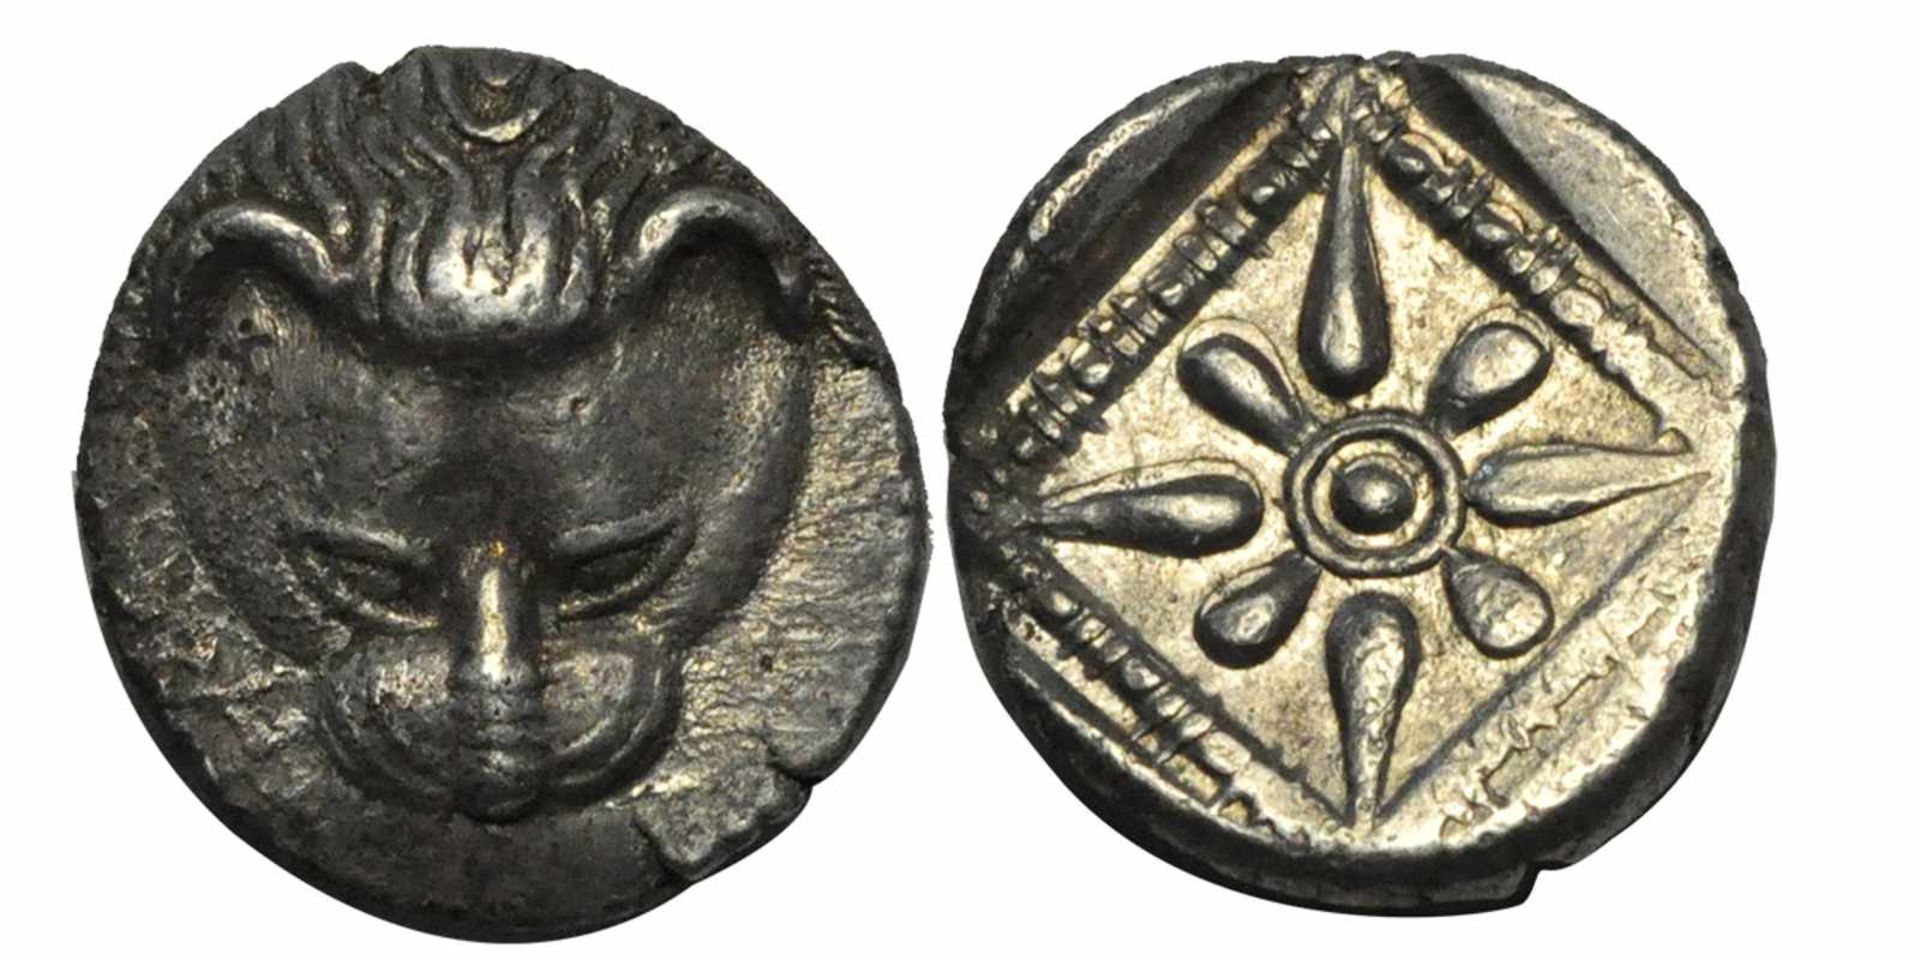 Cimmerian Bosporos, Pantikapaion. Circa 460-450 BC. VFCimmerian Bosporos, Pantikapaion. Circa 460-